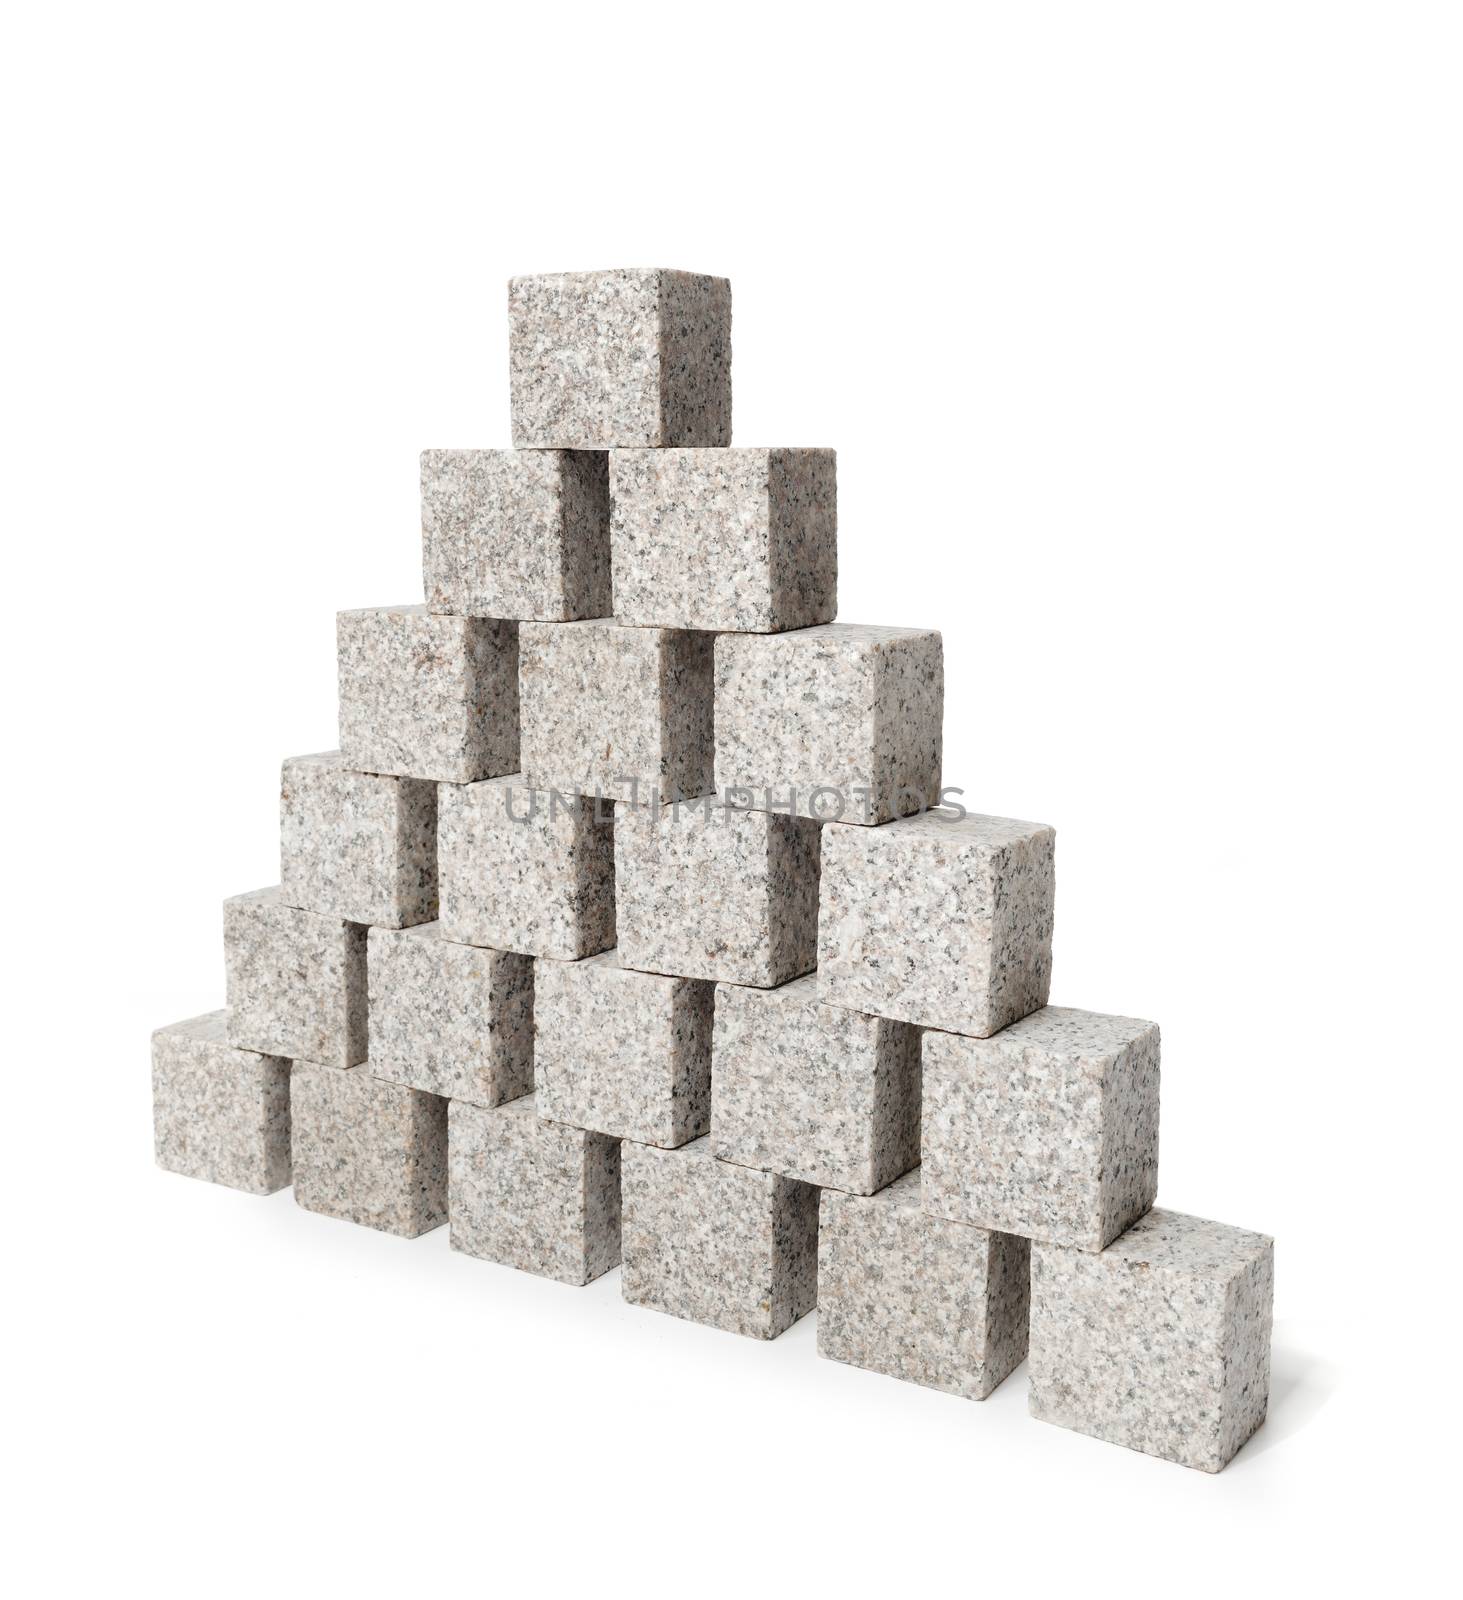 Pyramid made of small granite rock blocks.